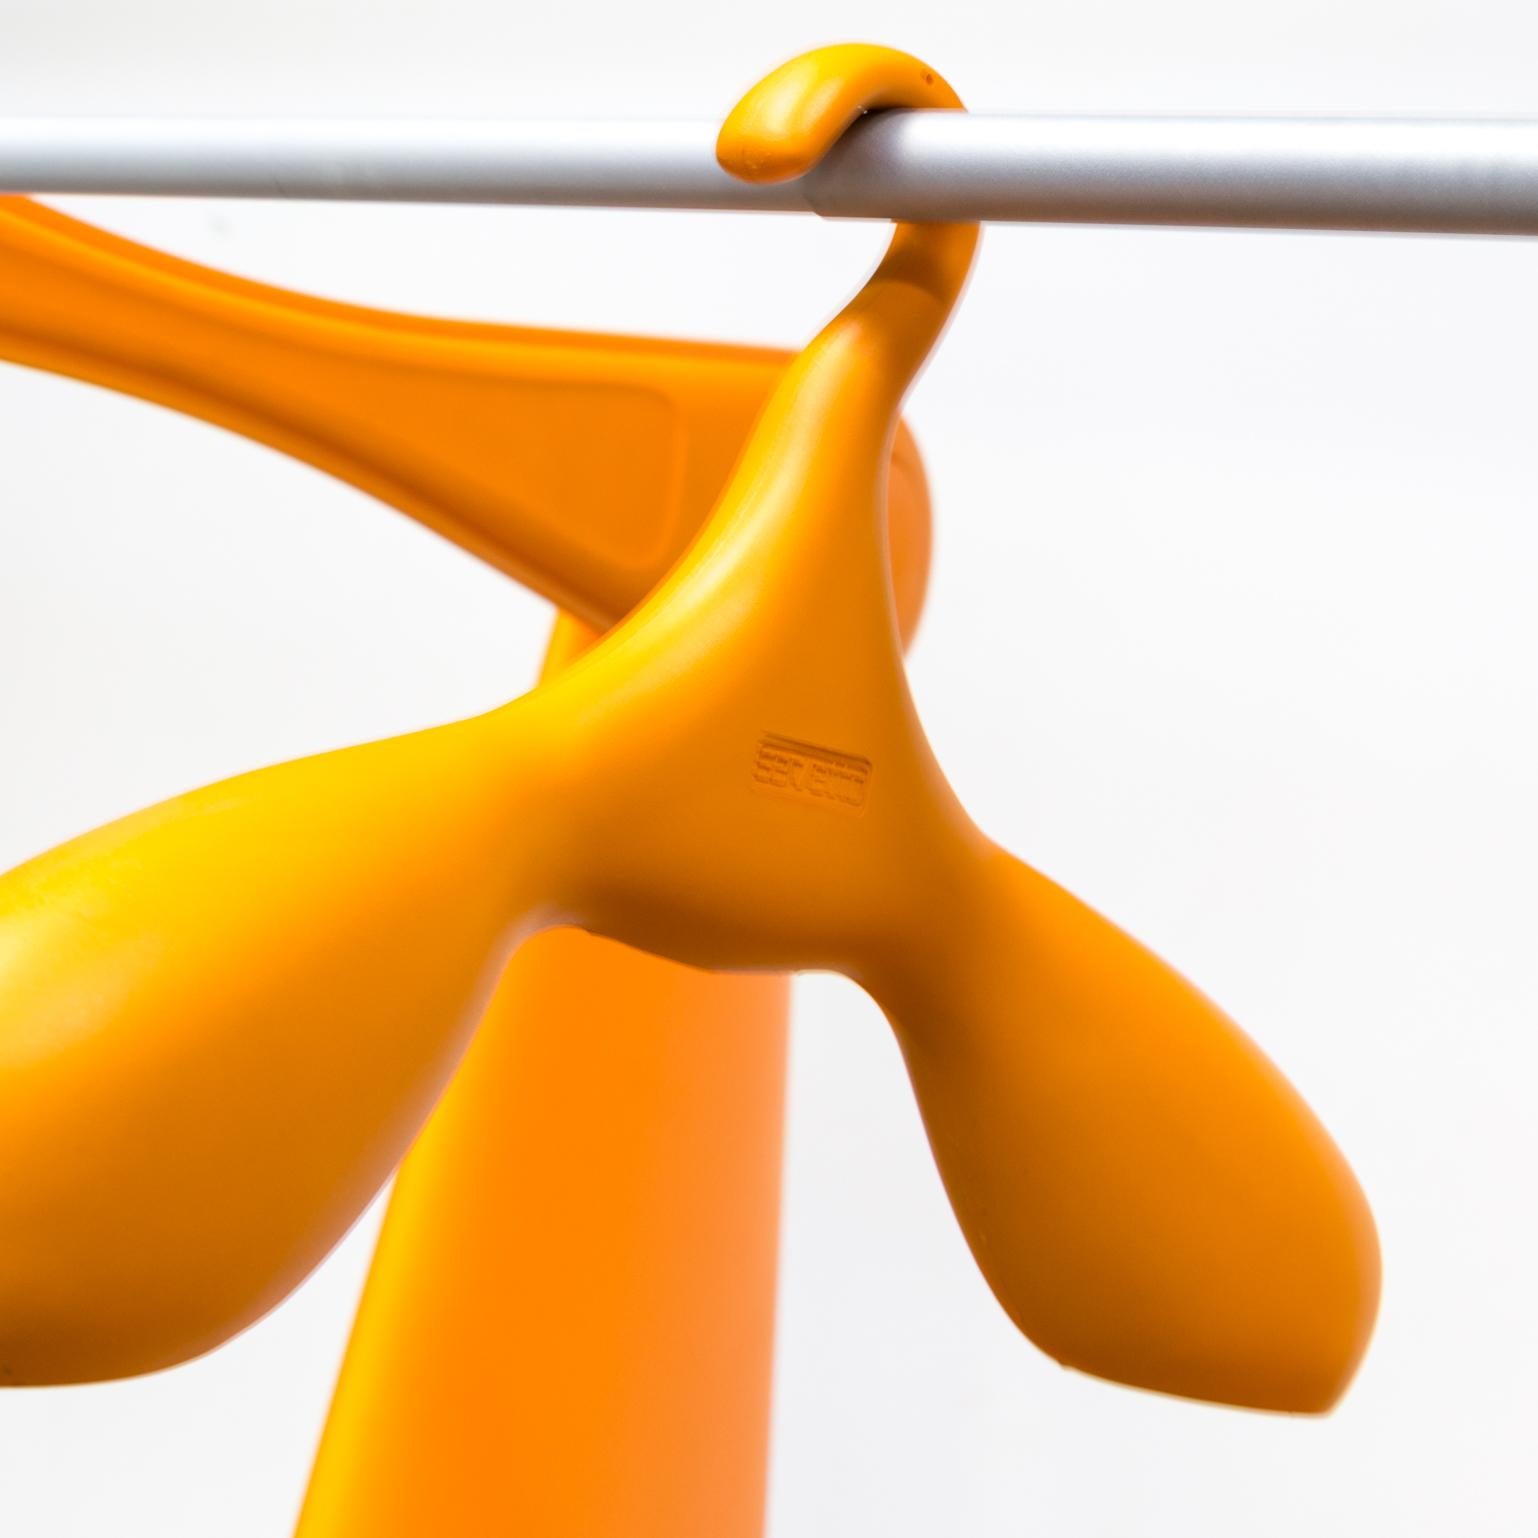 E. Terragni Coat Stand ‘Atelier’ & Servetto Lift and Dino Clothes Hangers For Sale 7